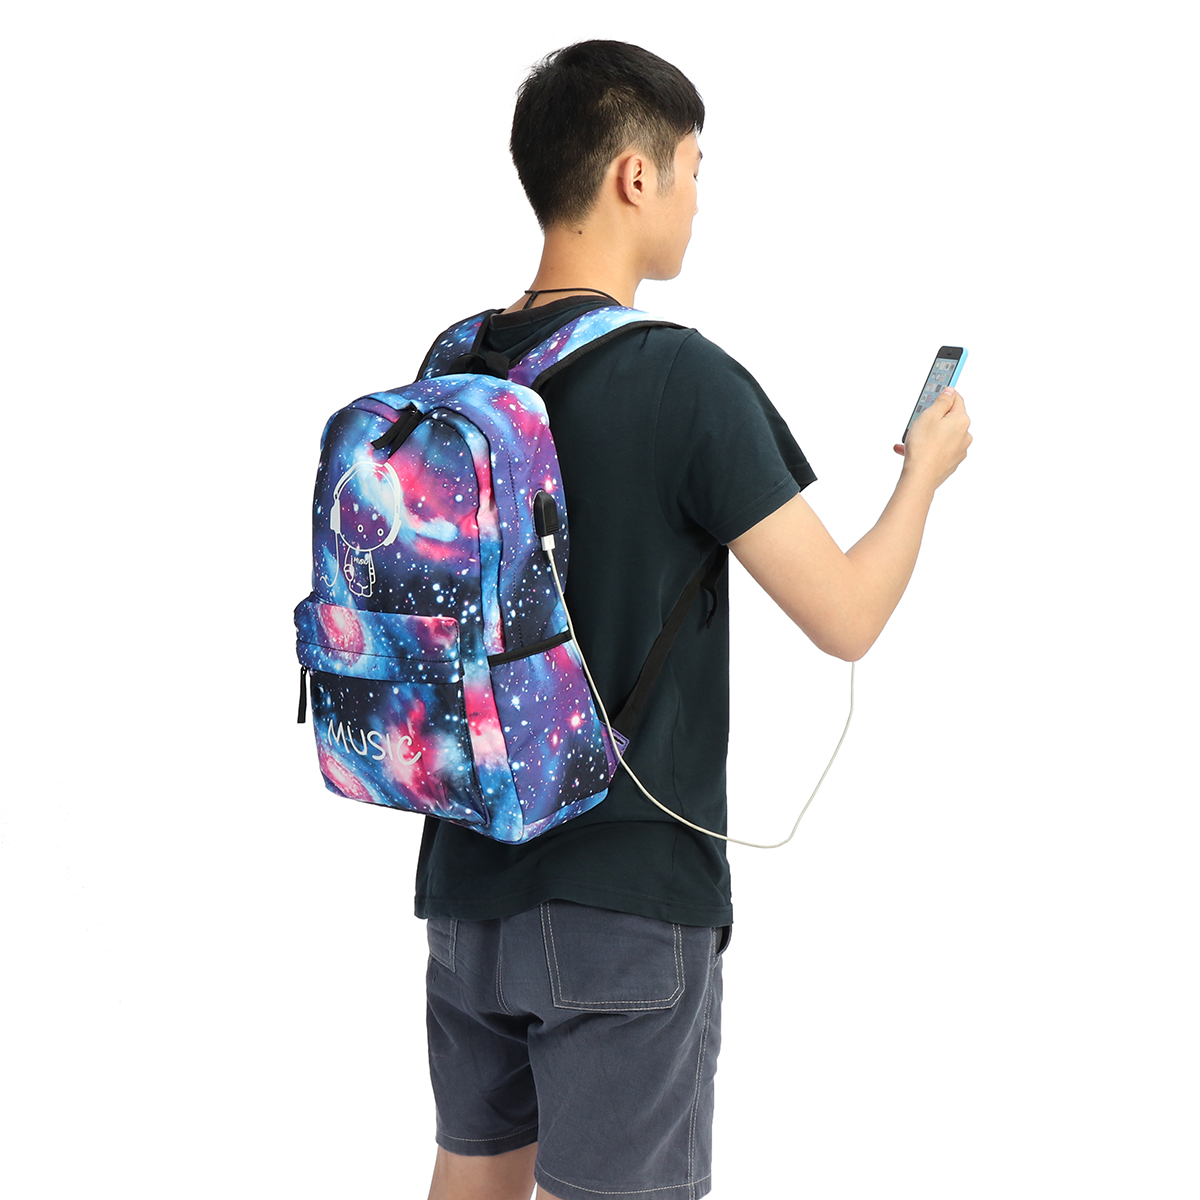 Outdoor-Night-Luminous-Backpack-USB-Oxford-School-Bag-Shoulder-Bag-Waterproof-Handbag-1373775-7